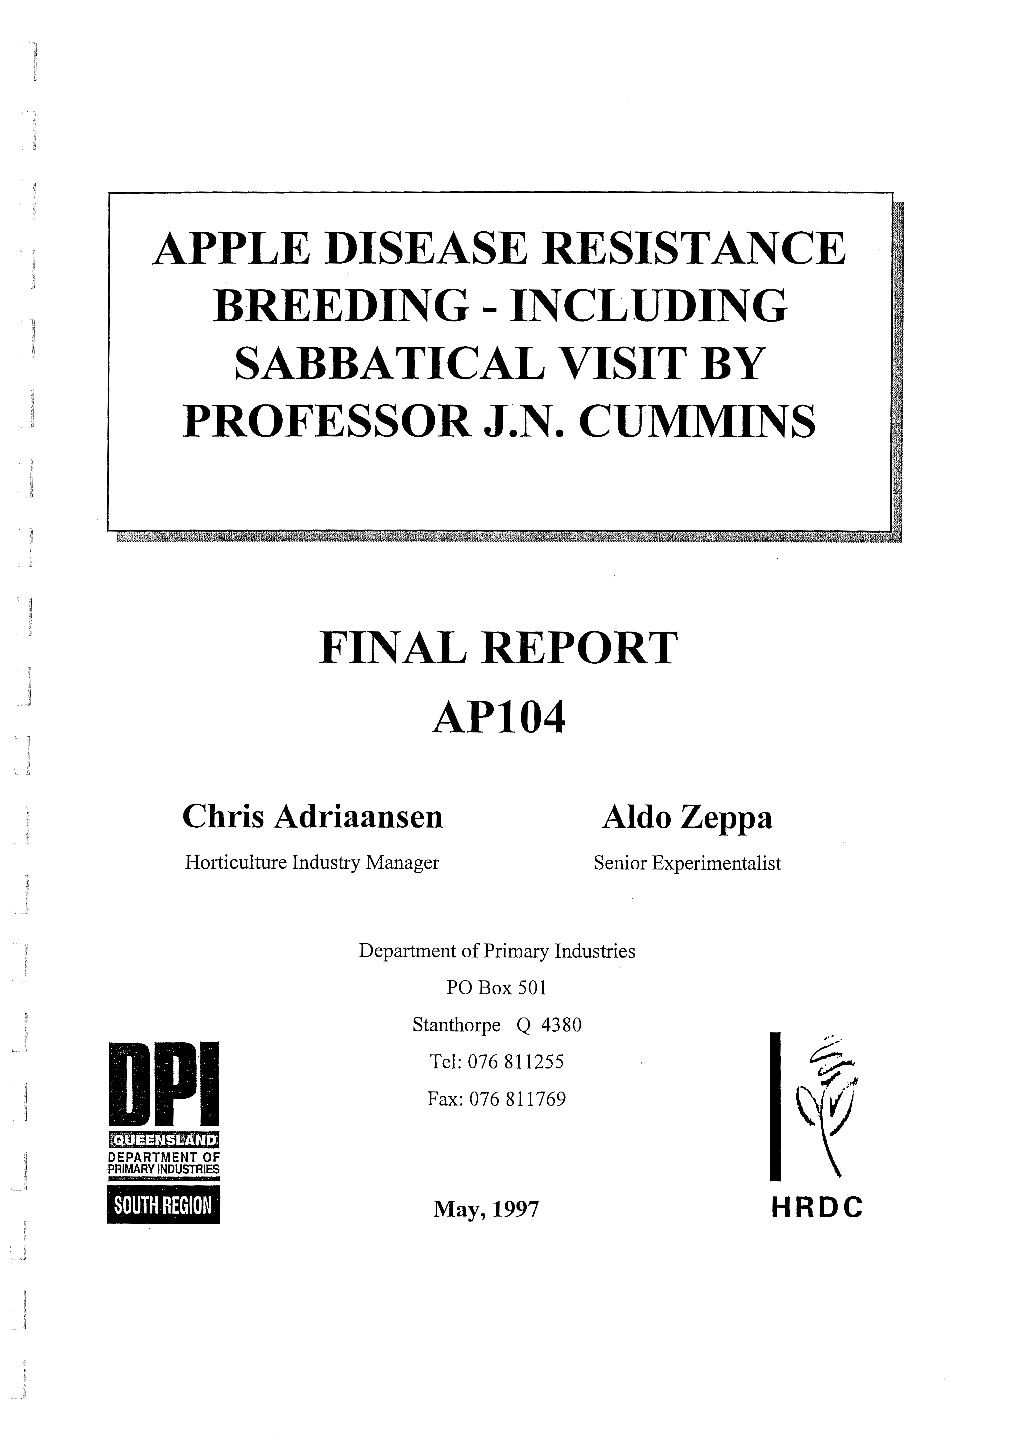 Apple Disease Resistance Breeding -Including Sabbatical Visit by Professor J.N. Cummins Final Report Ap104